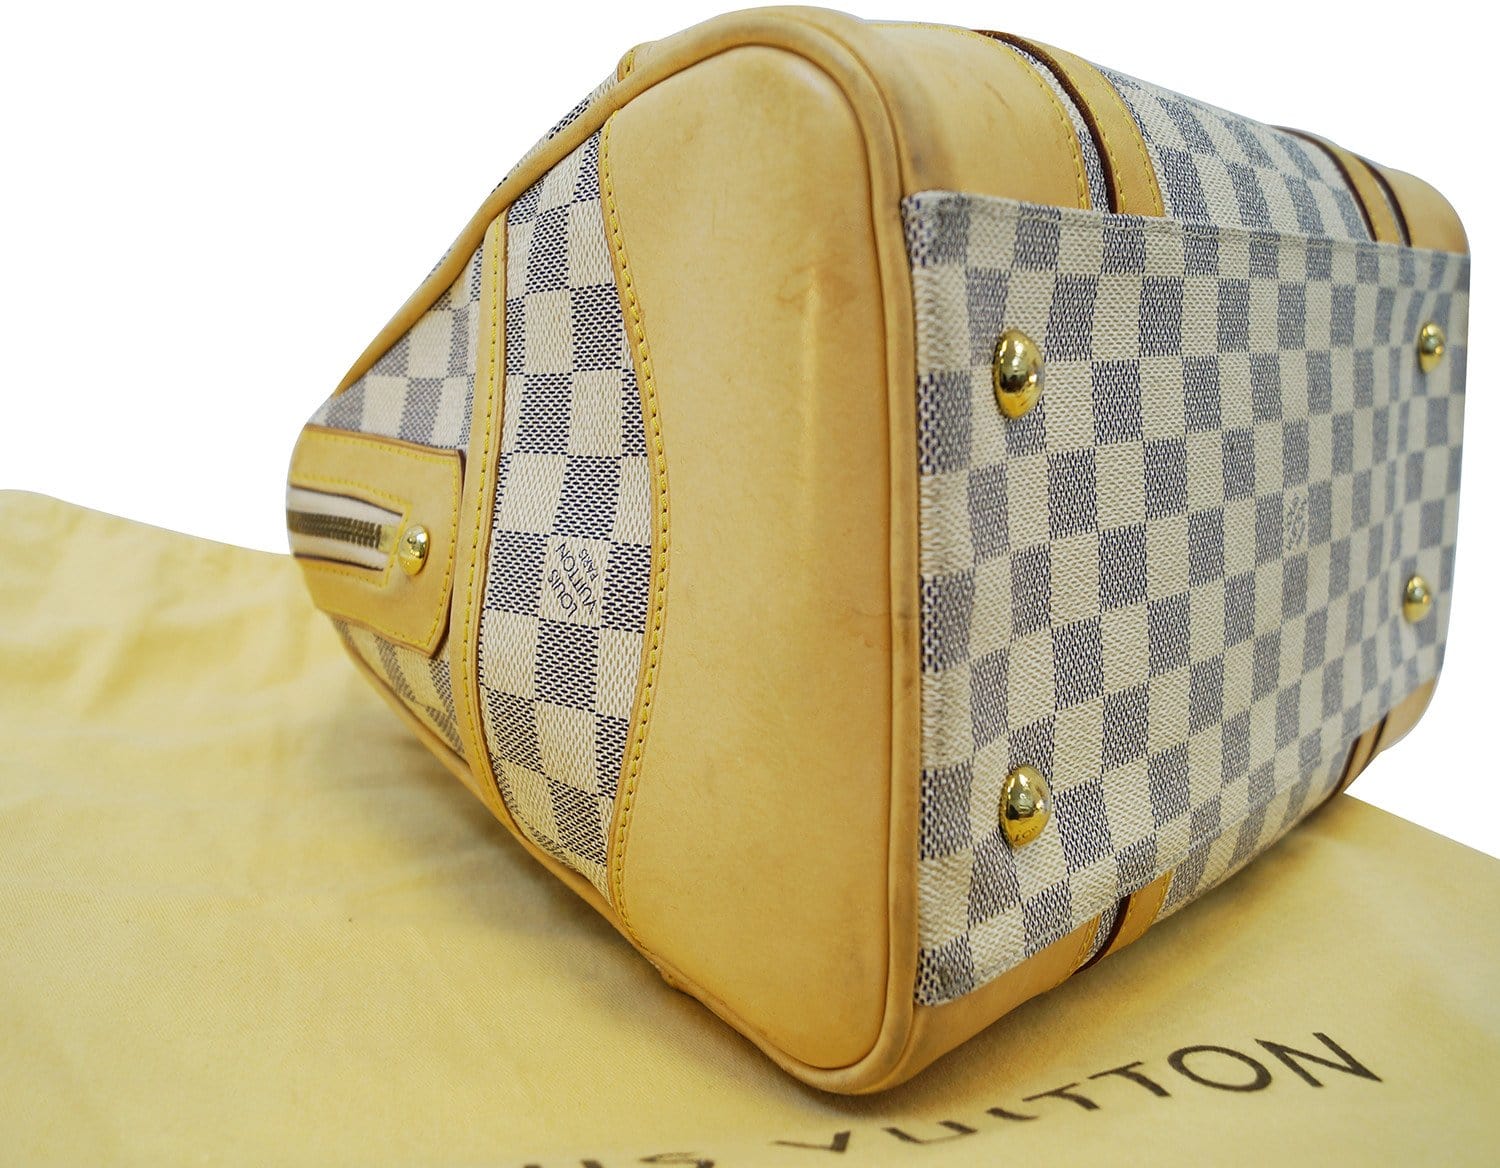 Louis Vuitton Damier Azur Berkeley Bag  Rent Louis Vuitton Handbags for  $55/month